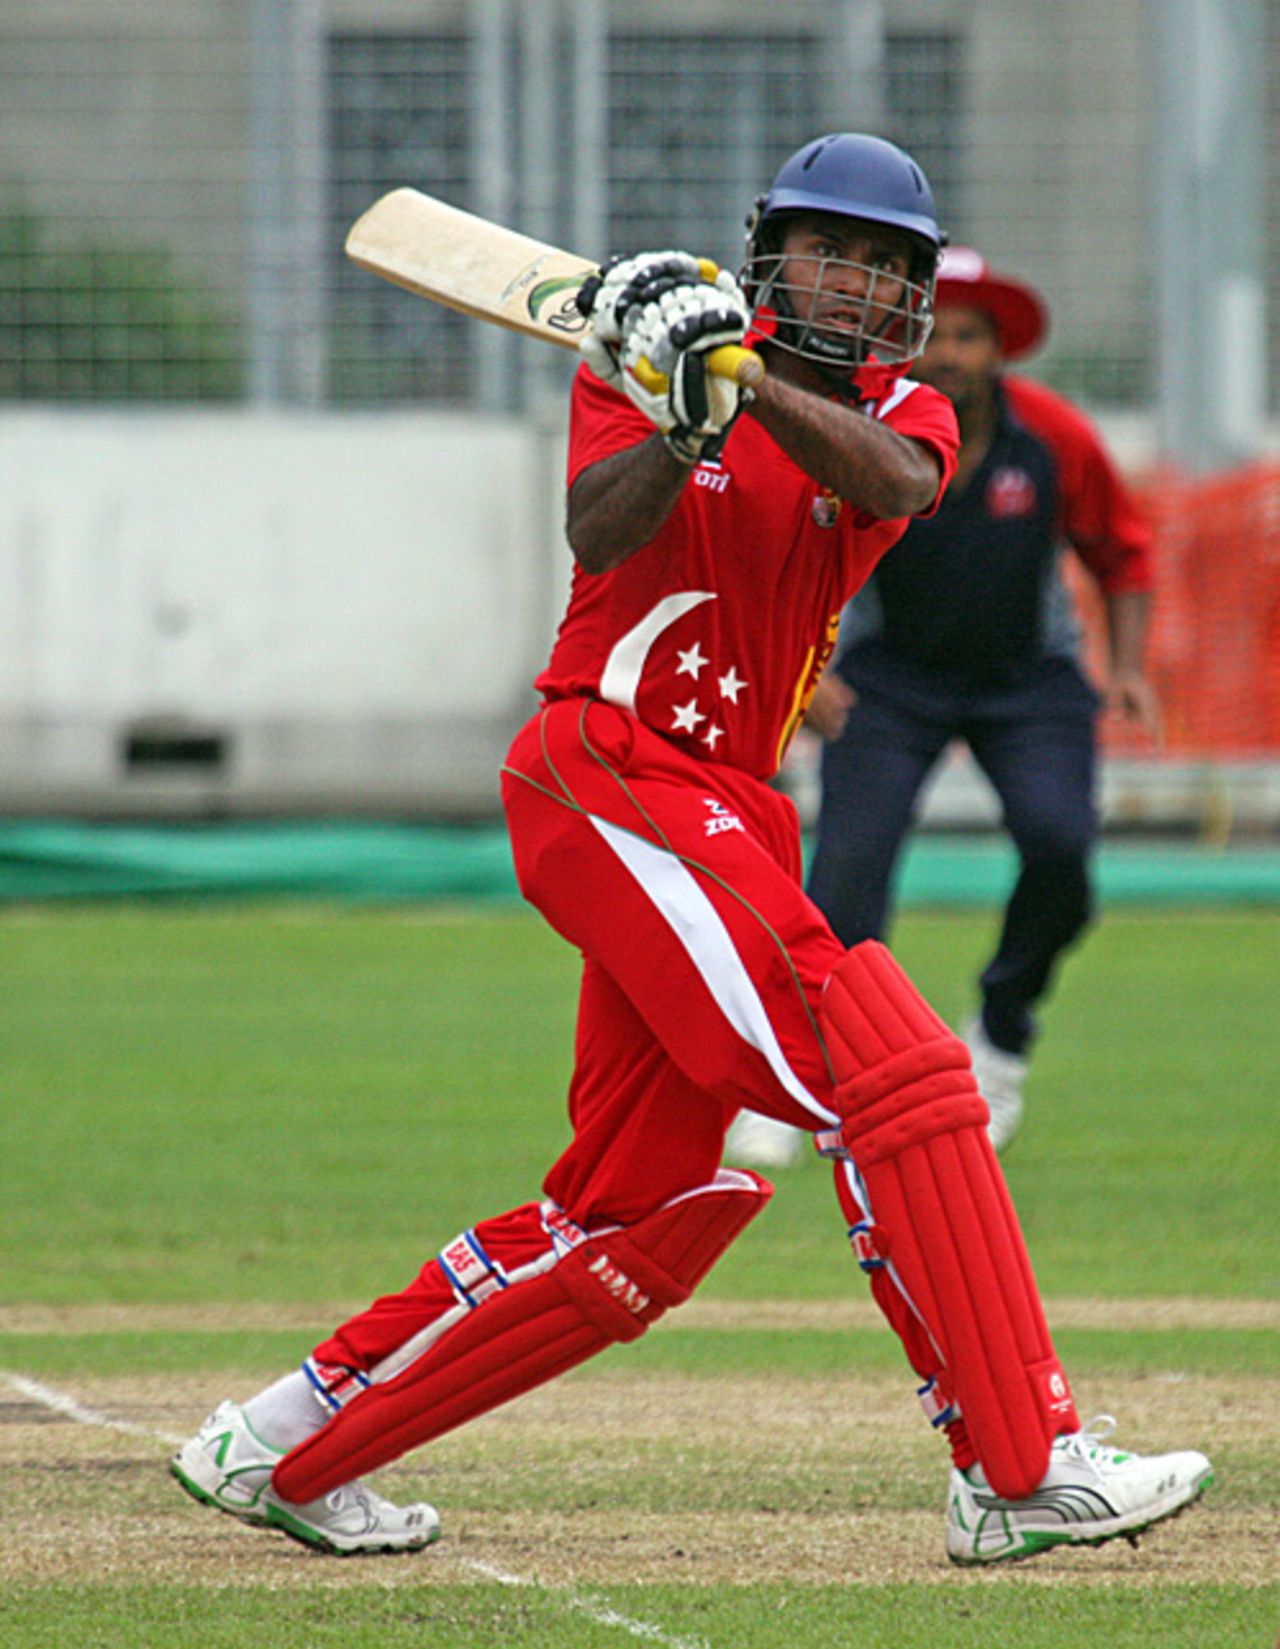 Buddikha Mendis pulls for six during his hundred, Singapore v Bahrain, ICC World Cricket League Division 6, Singapore, September 1, 2009